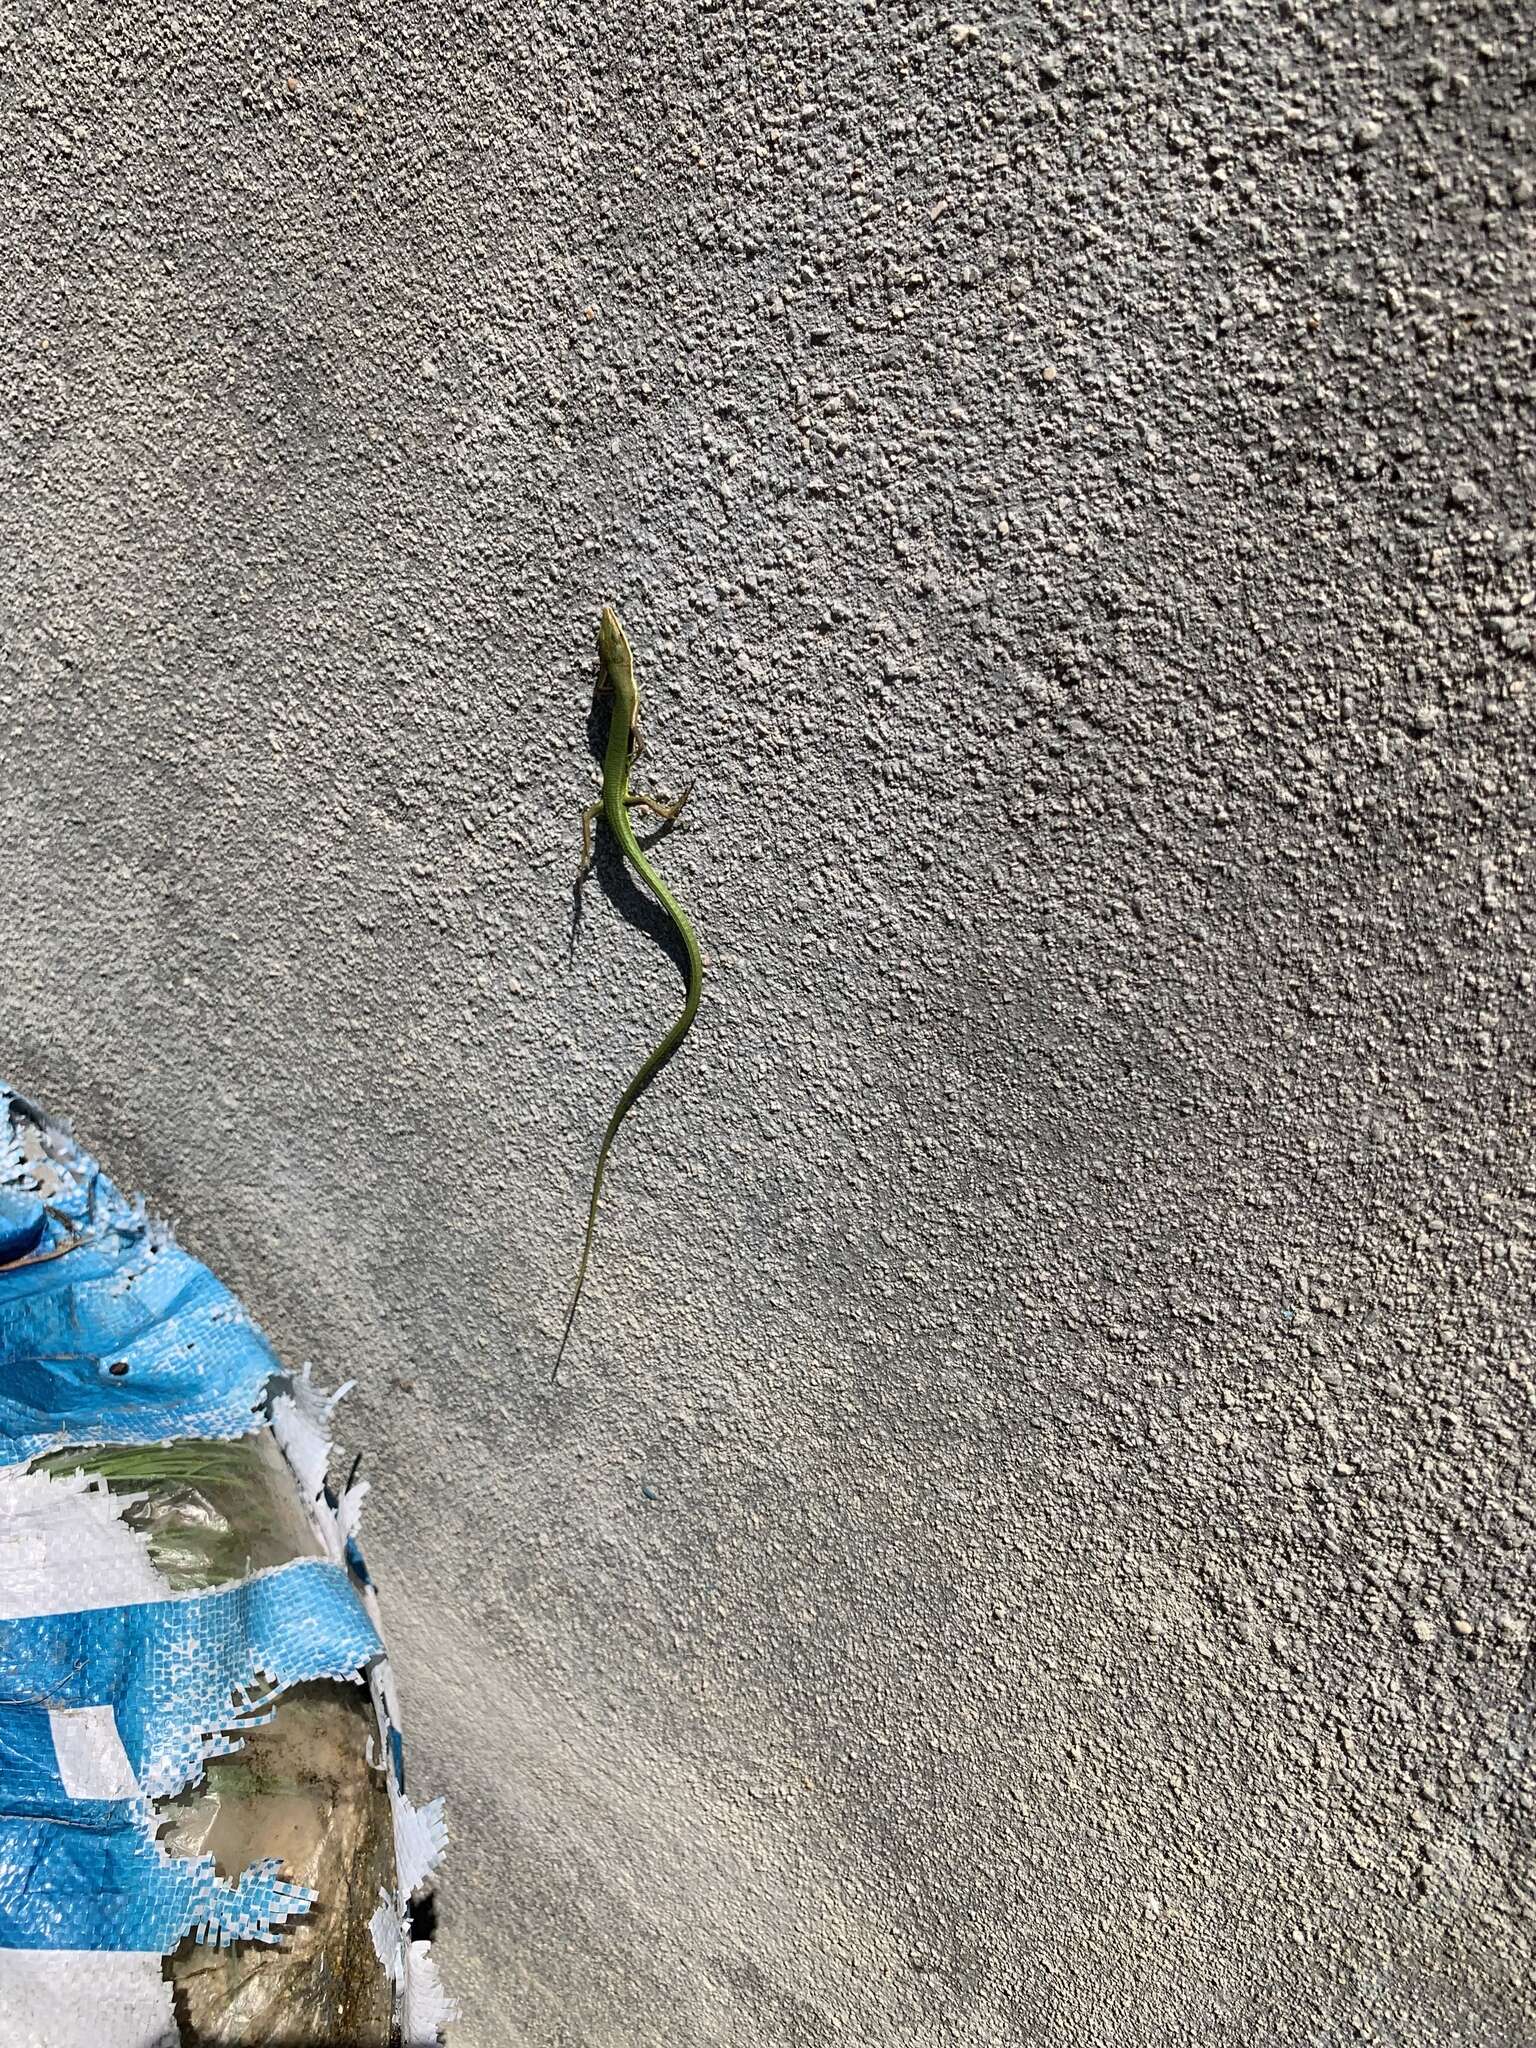 Image of Chung-an ground lizard